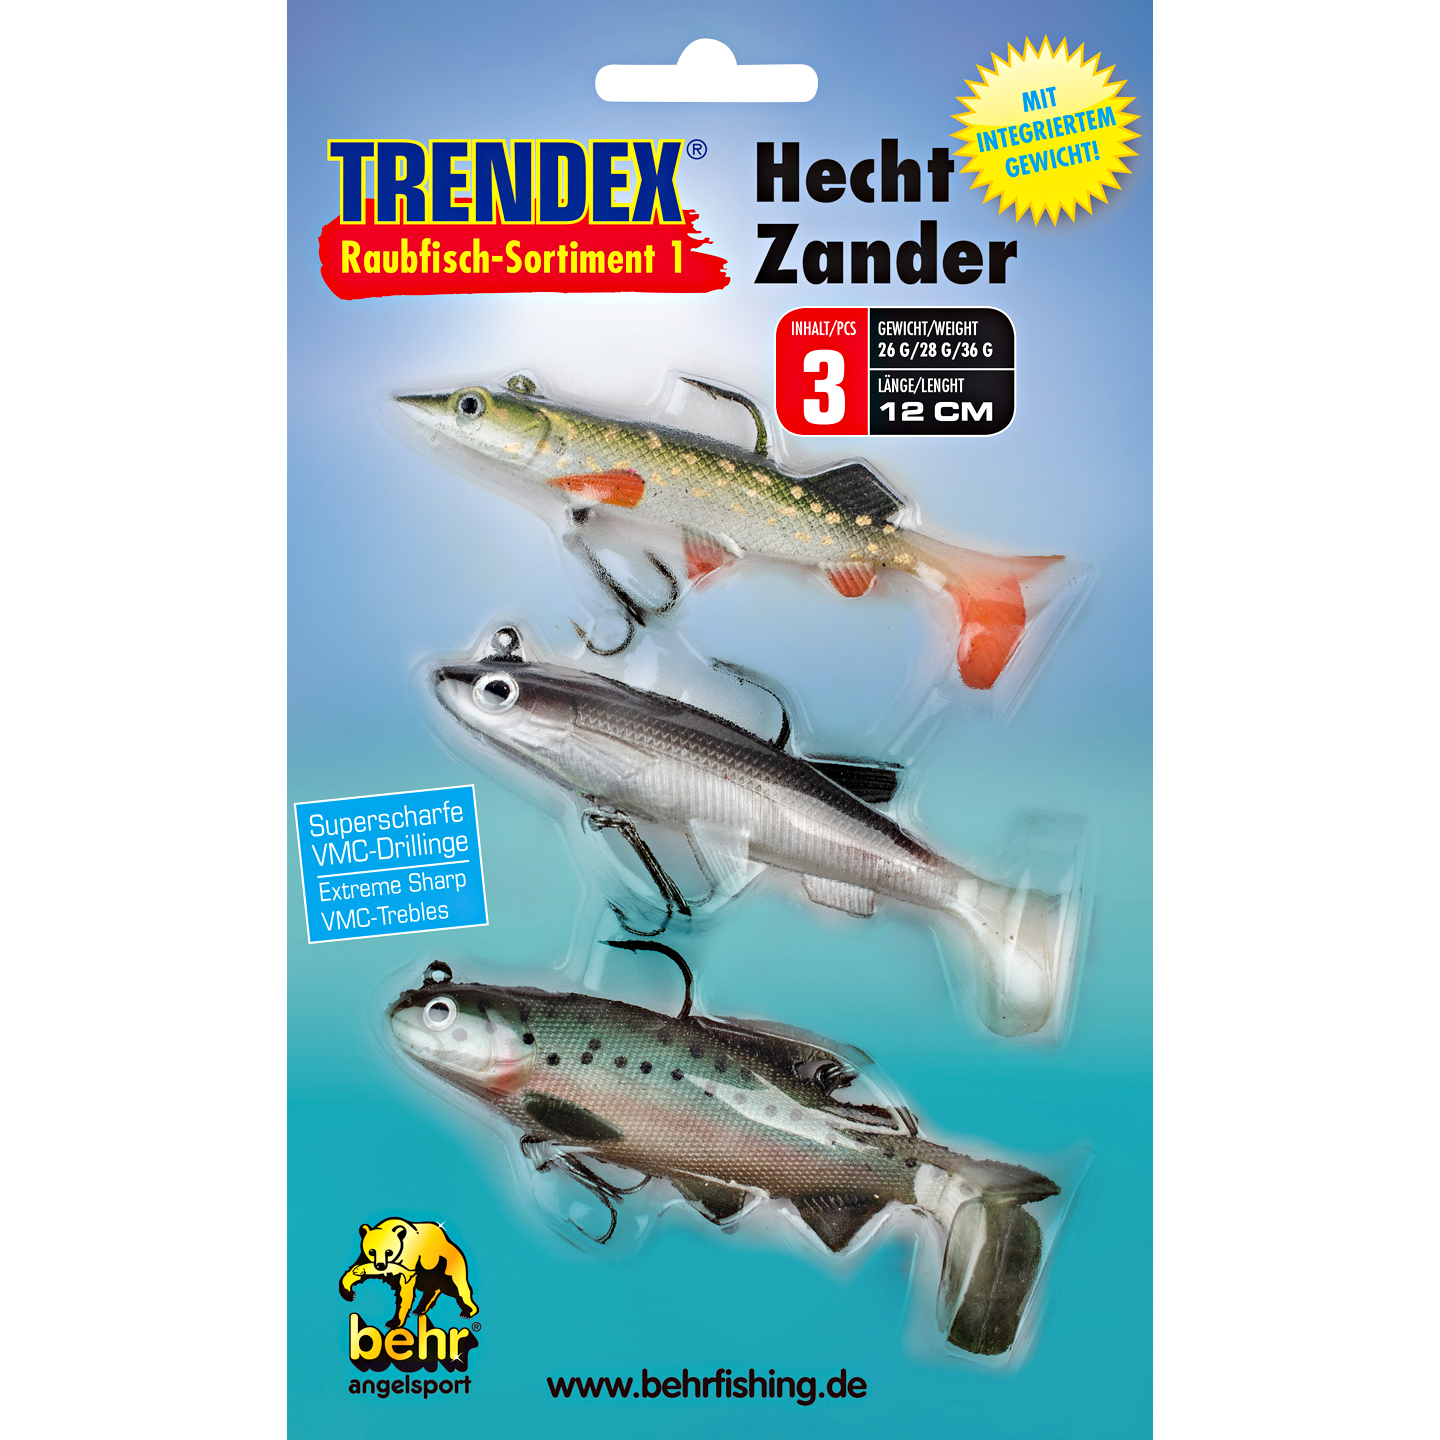 Trendex Predator Assortment 1 (Pike/Zander) 